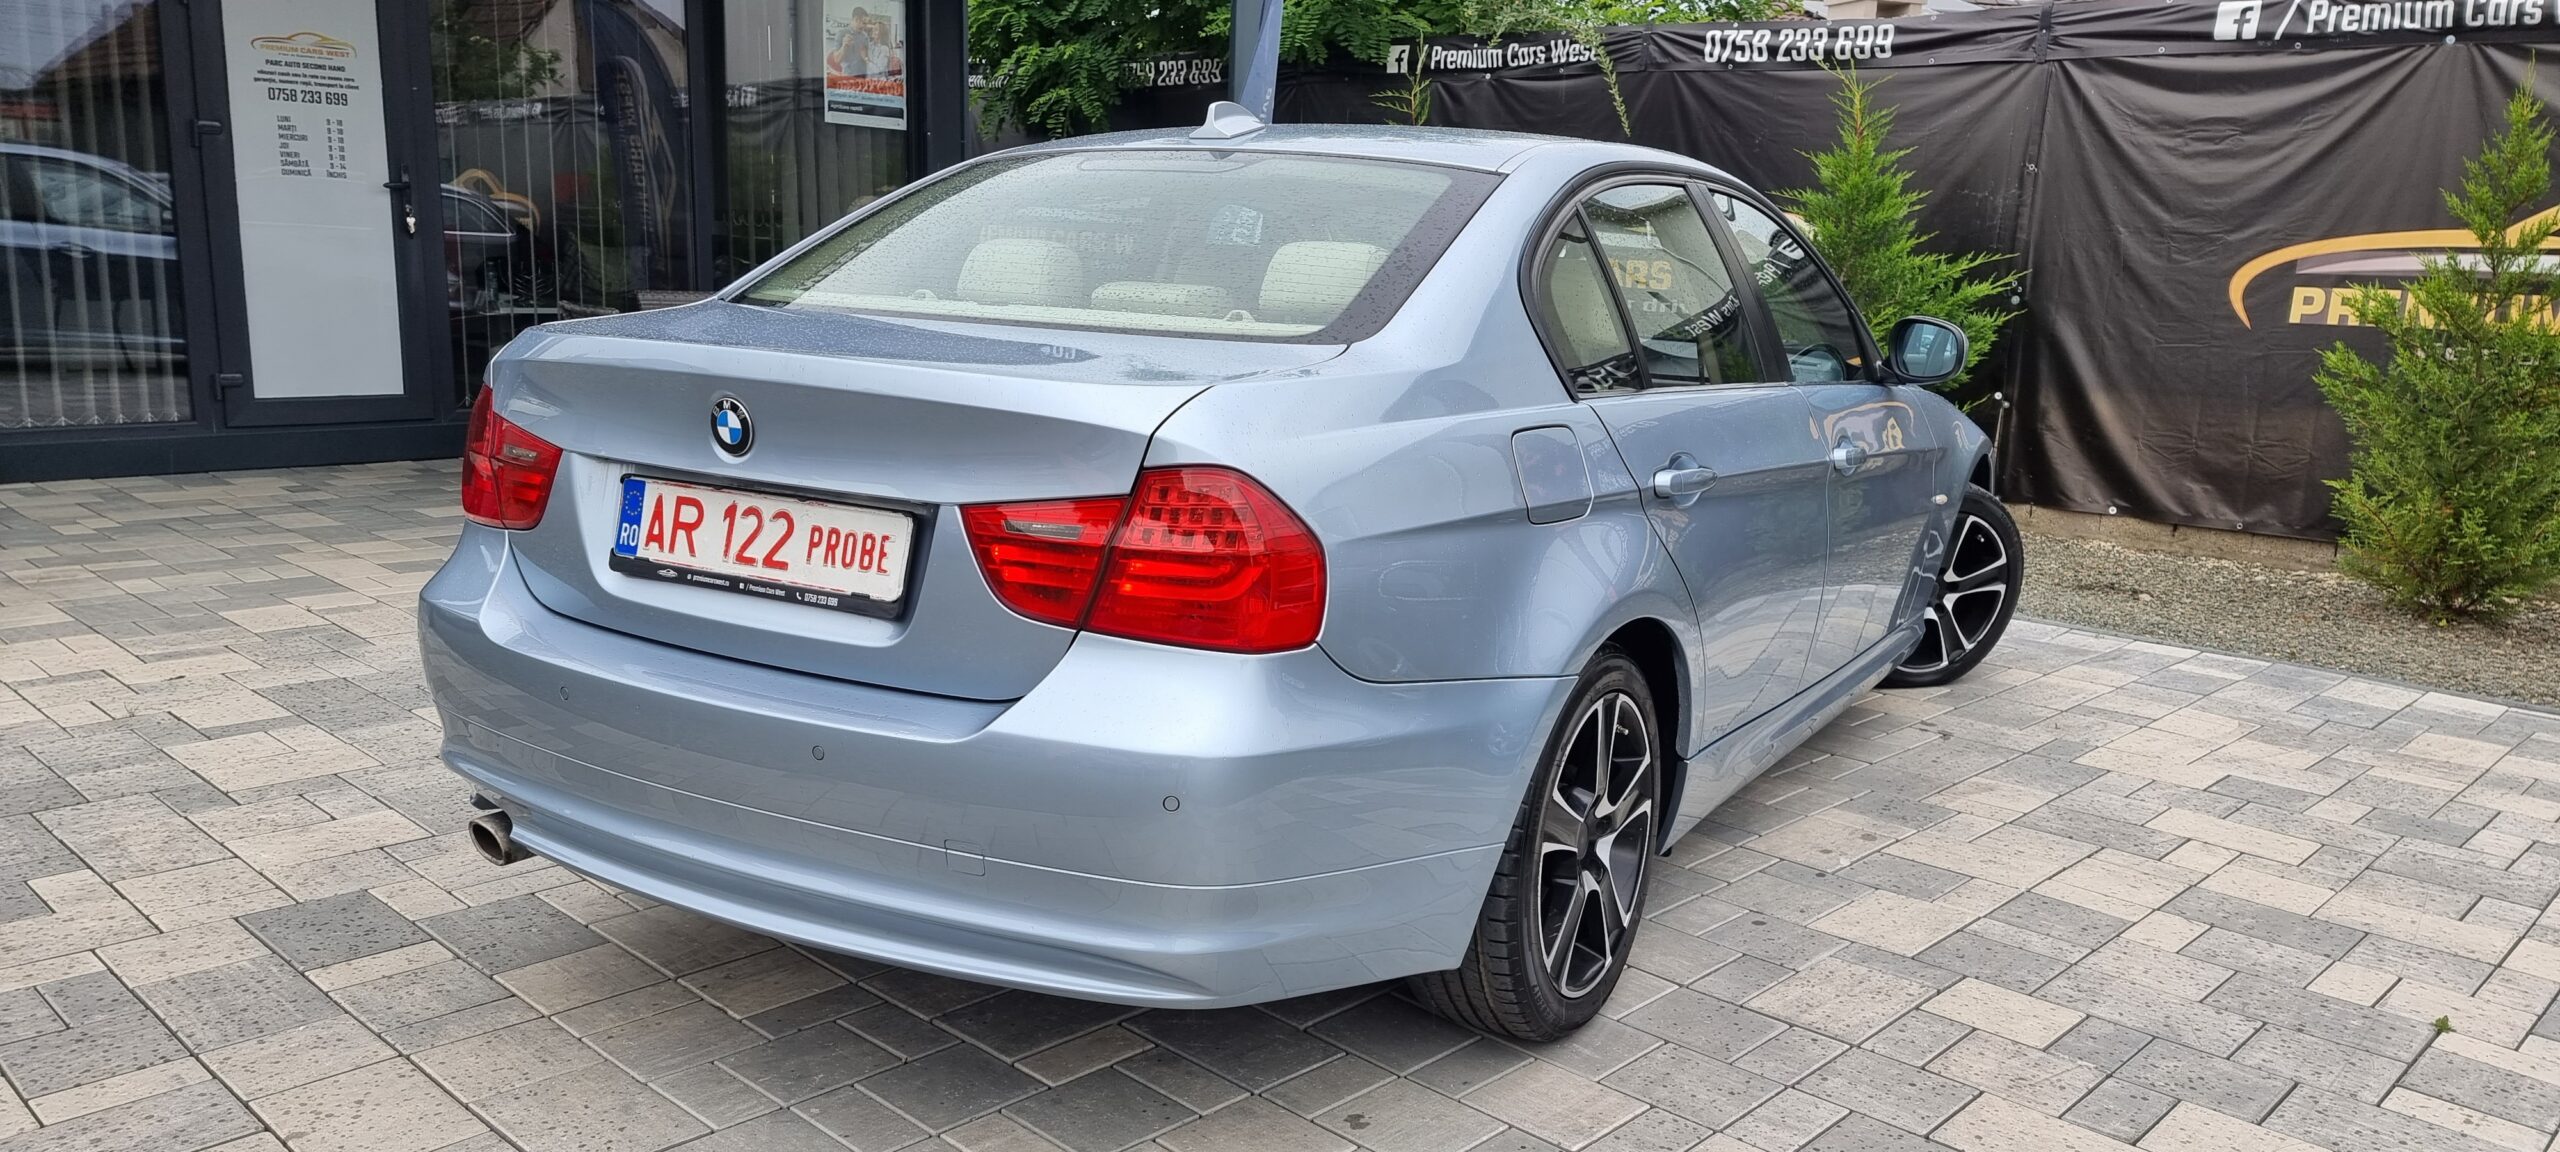 BMW SERIA 3, 2.0 DIESEL, 143 CP, EURO 5